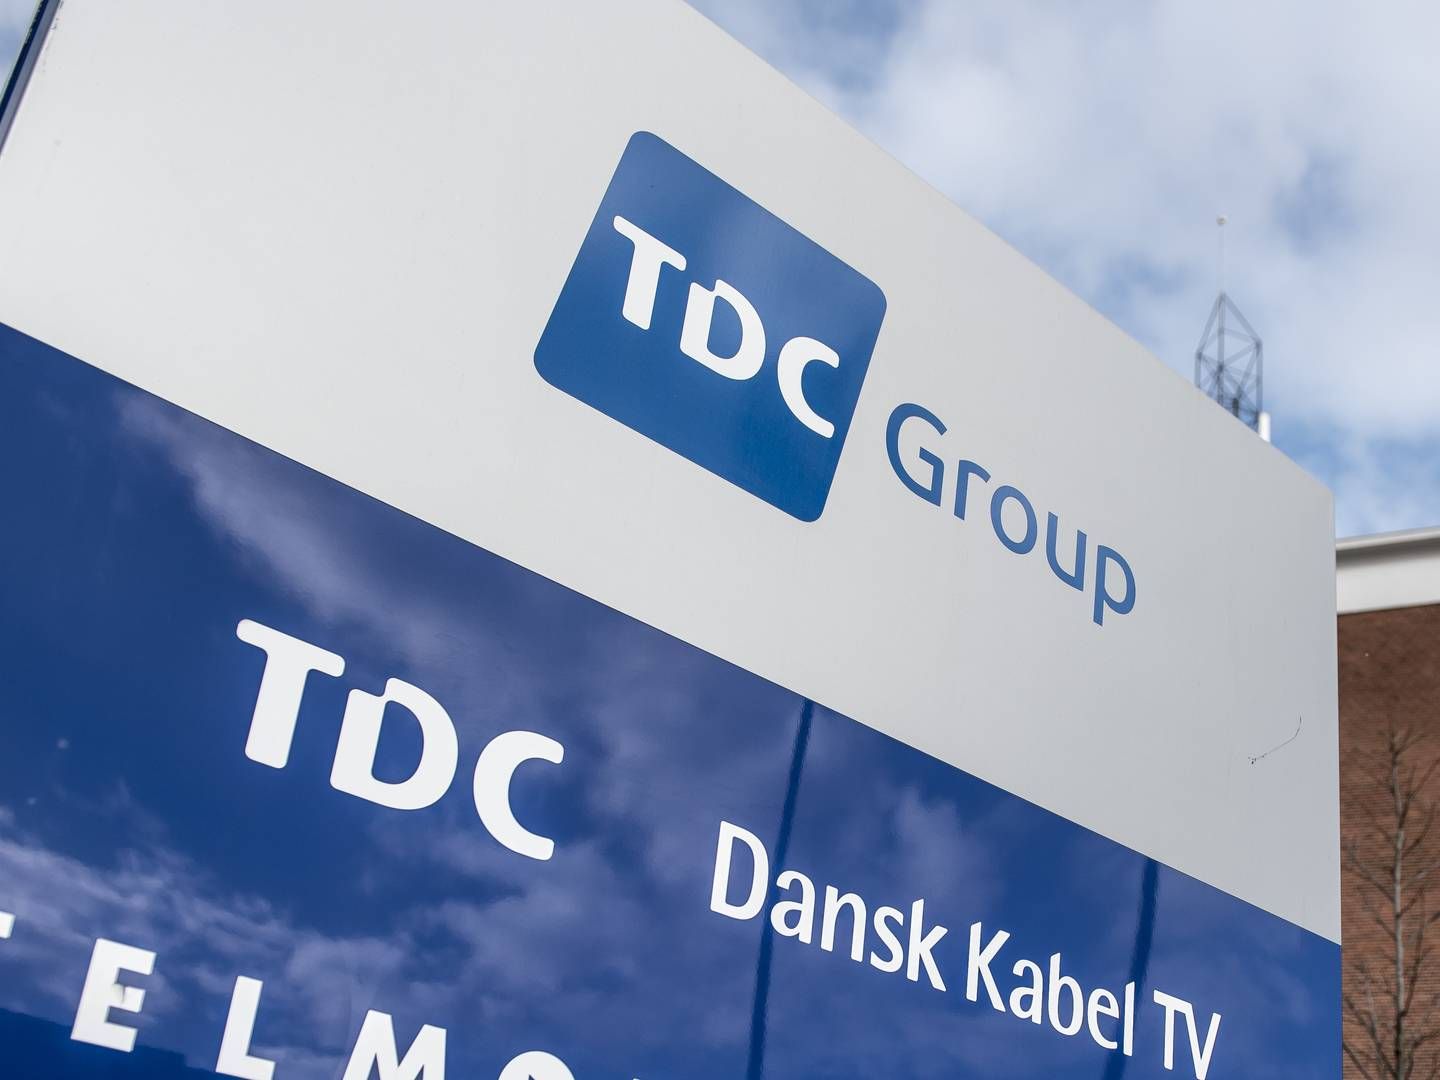 TDC Erhverv mister en direktør. | Foto: Mads Claus Rasmussen//